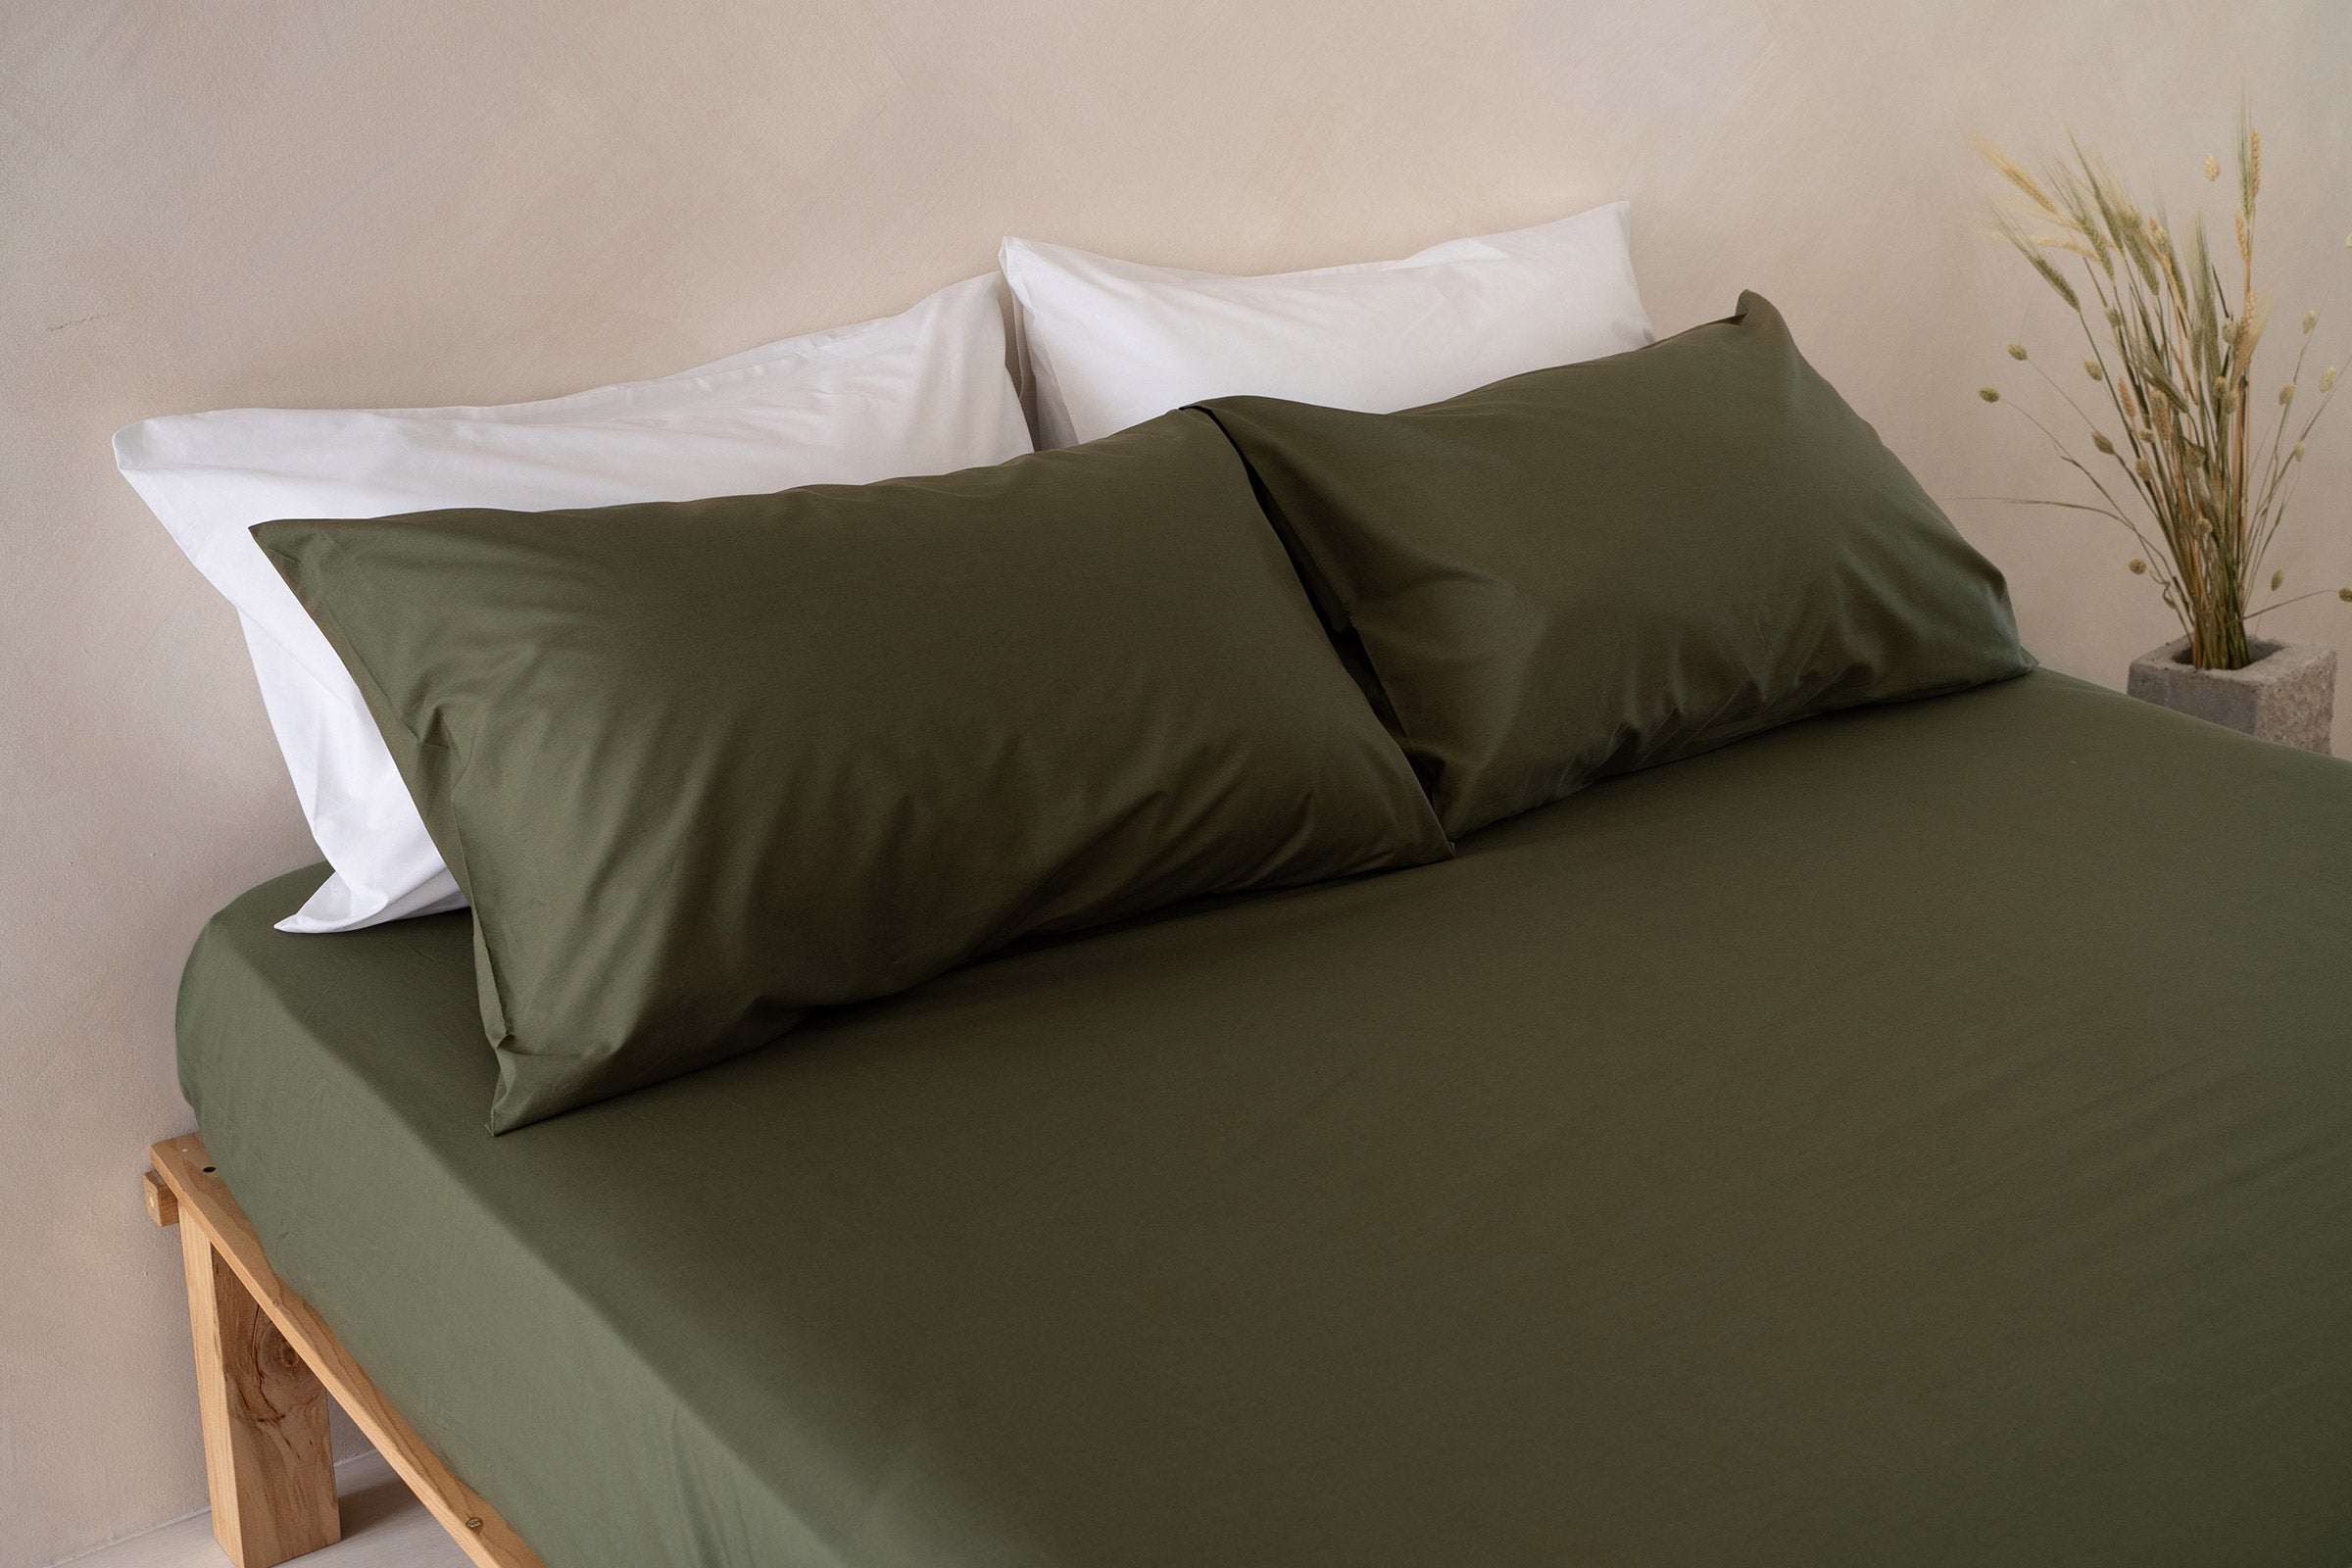 crisp-olive-fitted-sheet-pillowcase-pair-white-pillowcase-pair-by-sojao.jpg